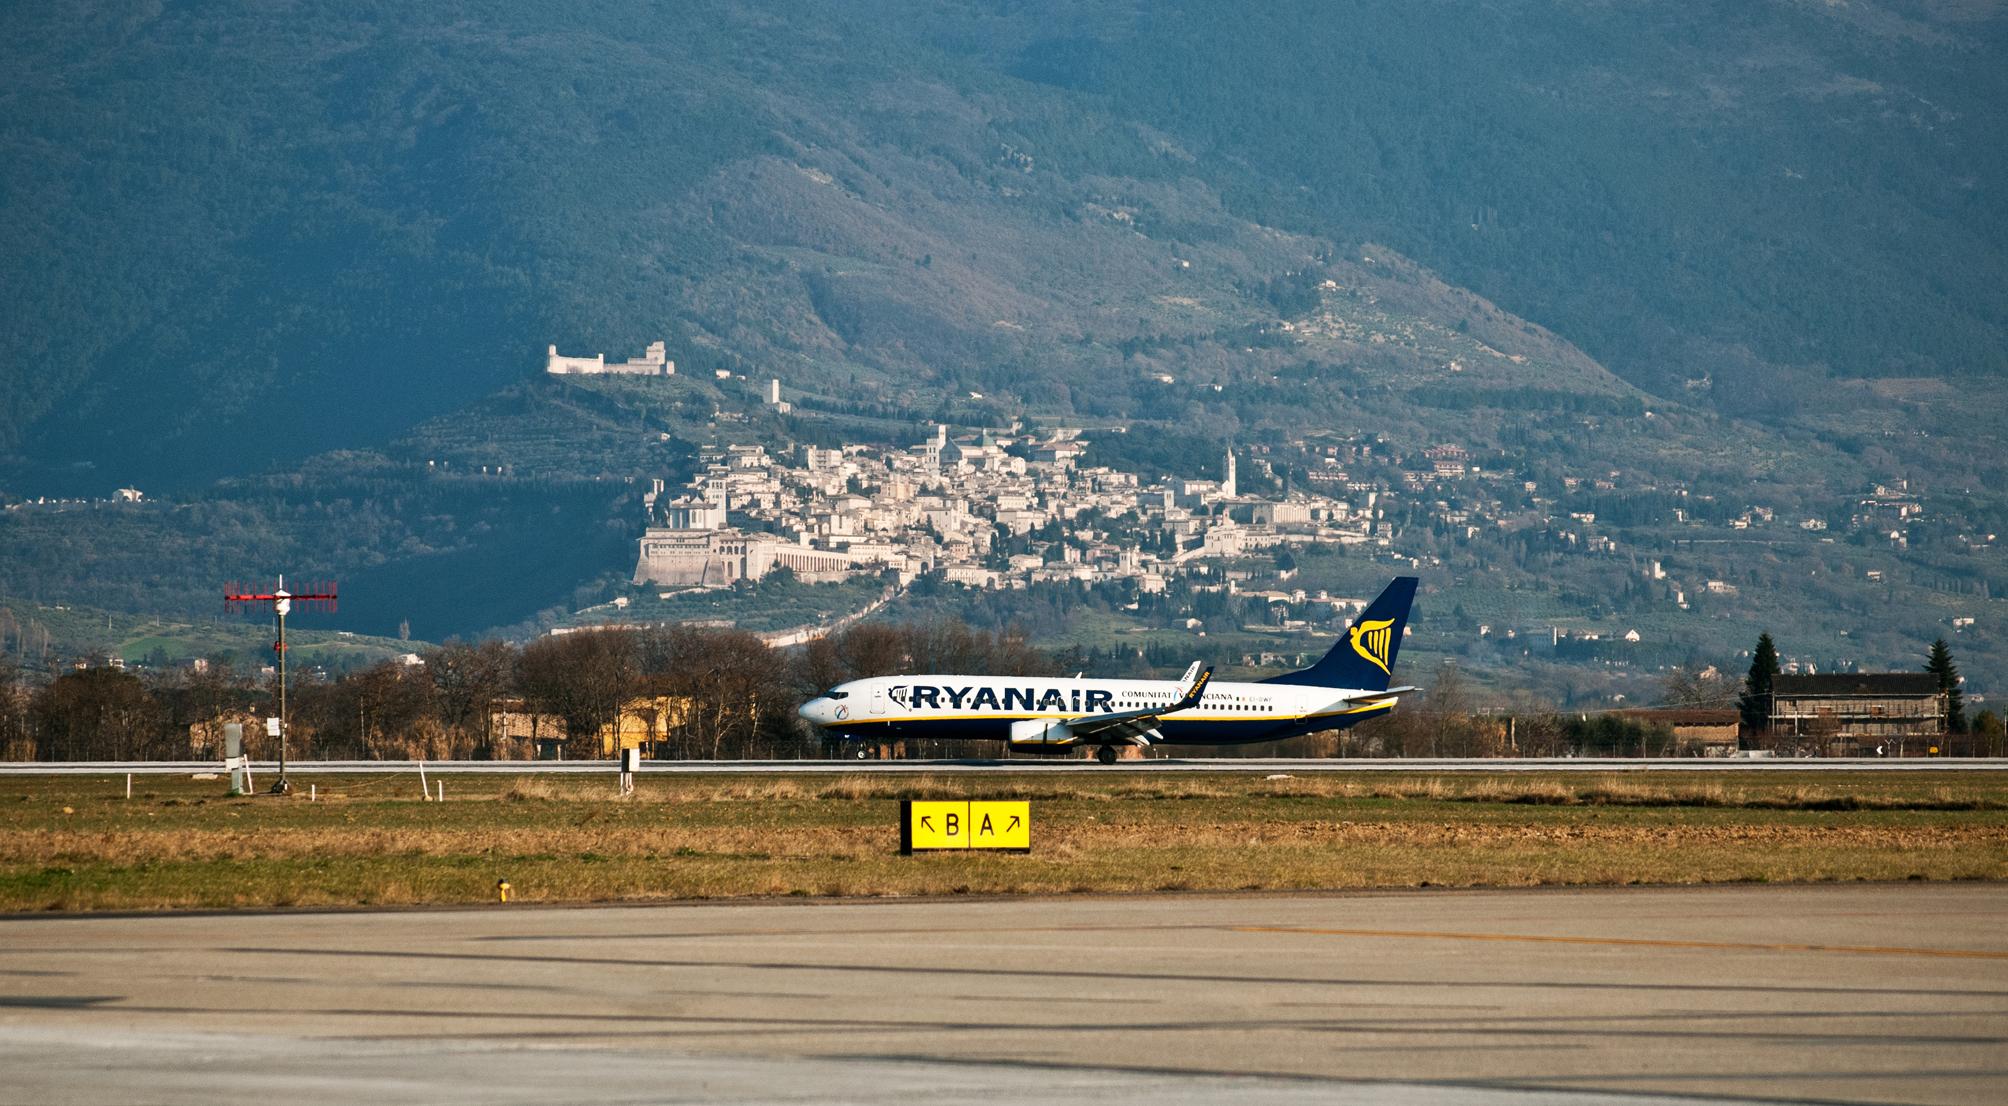 Aeroporto Umbria Perugia dati traffico gennaio febbraio 2018